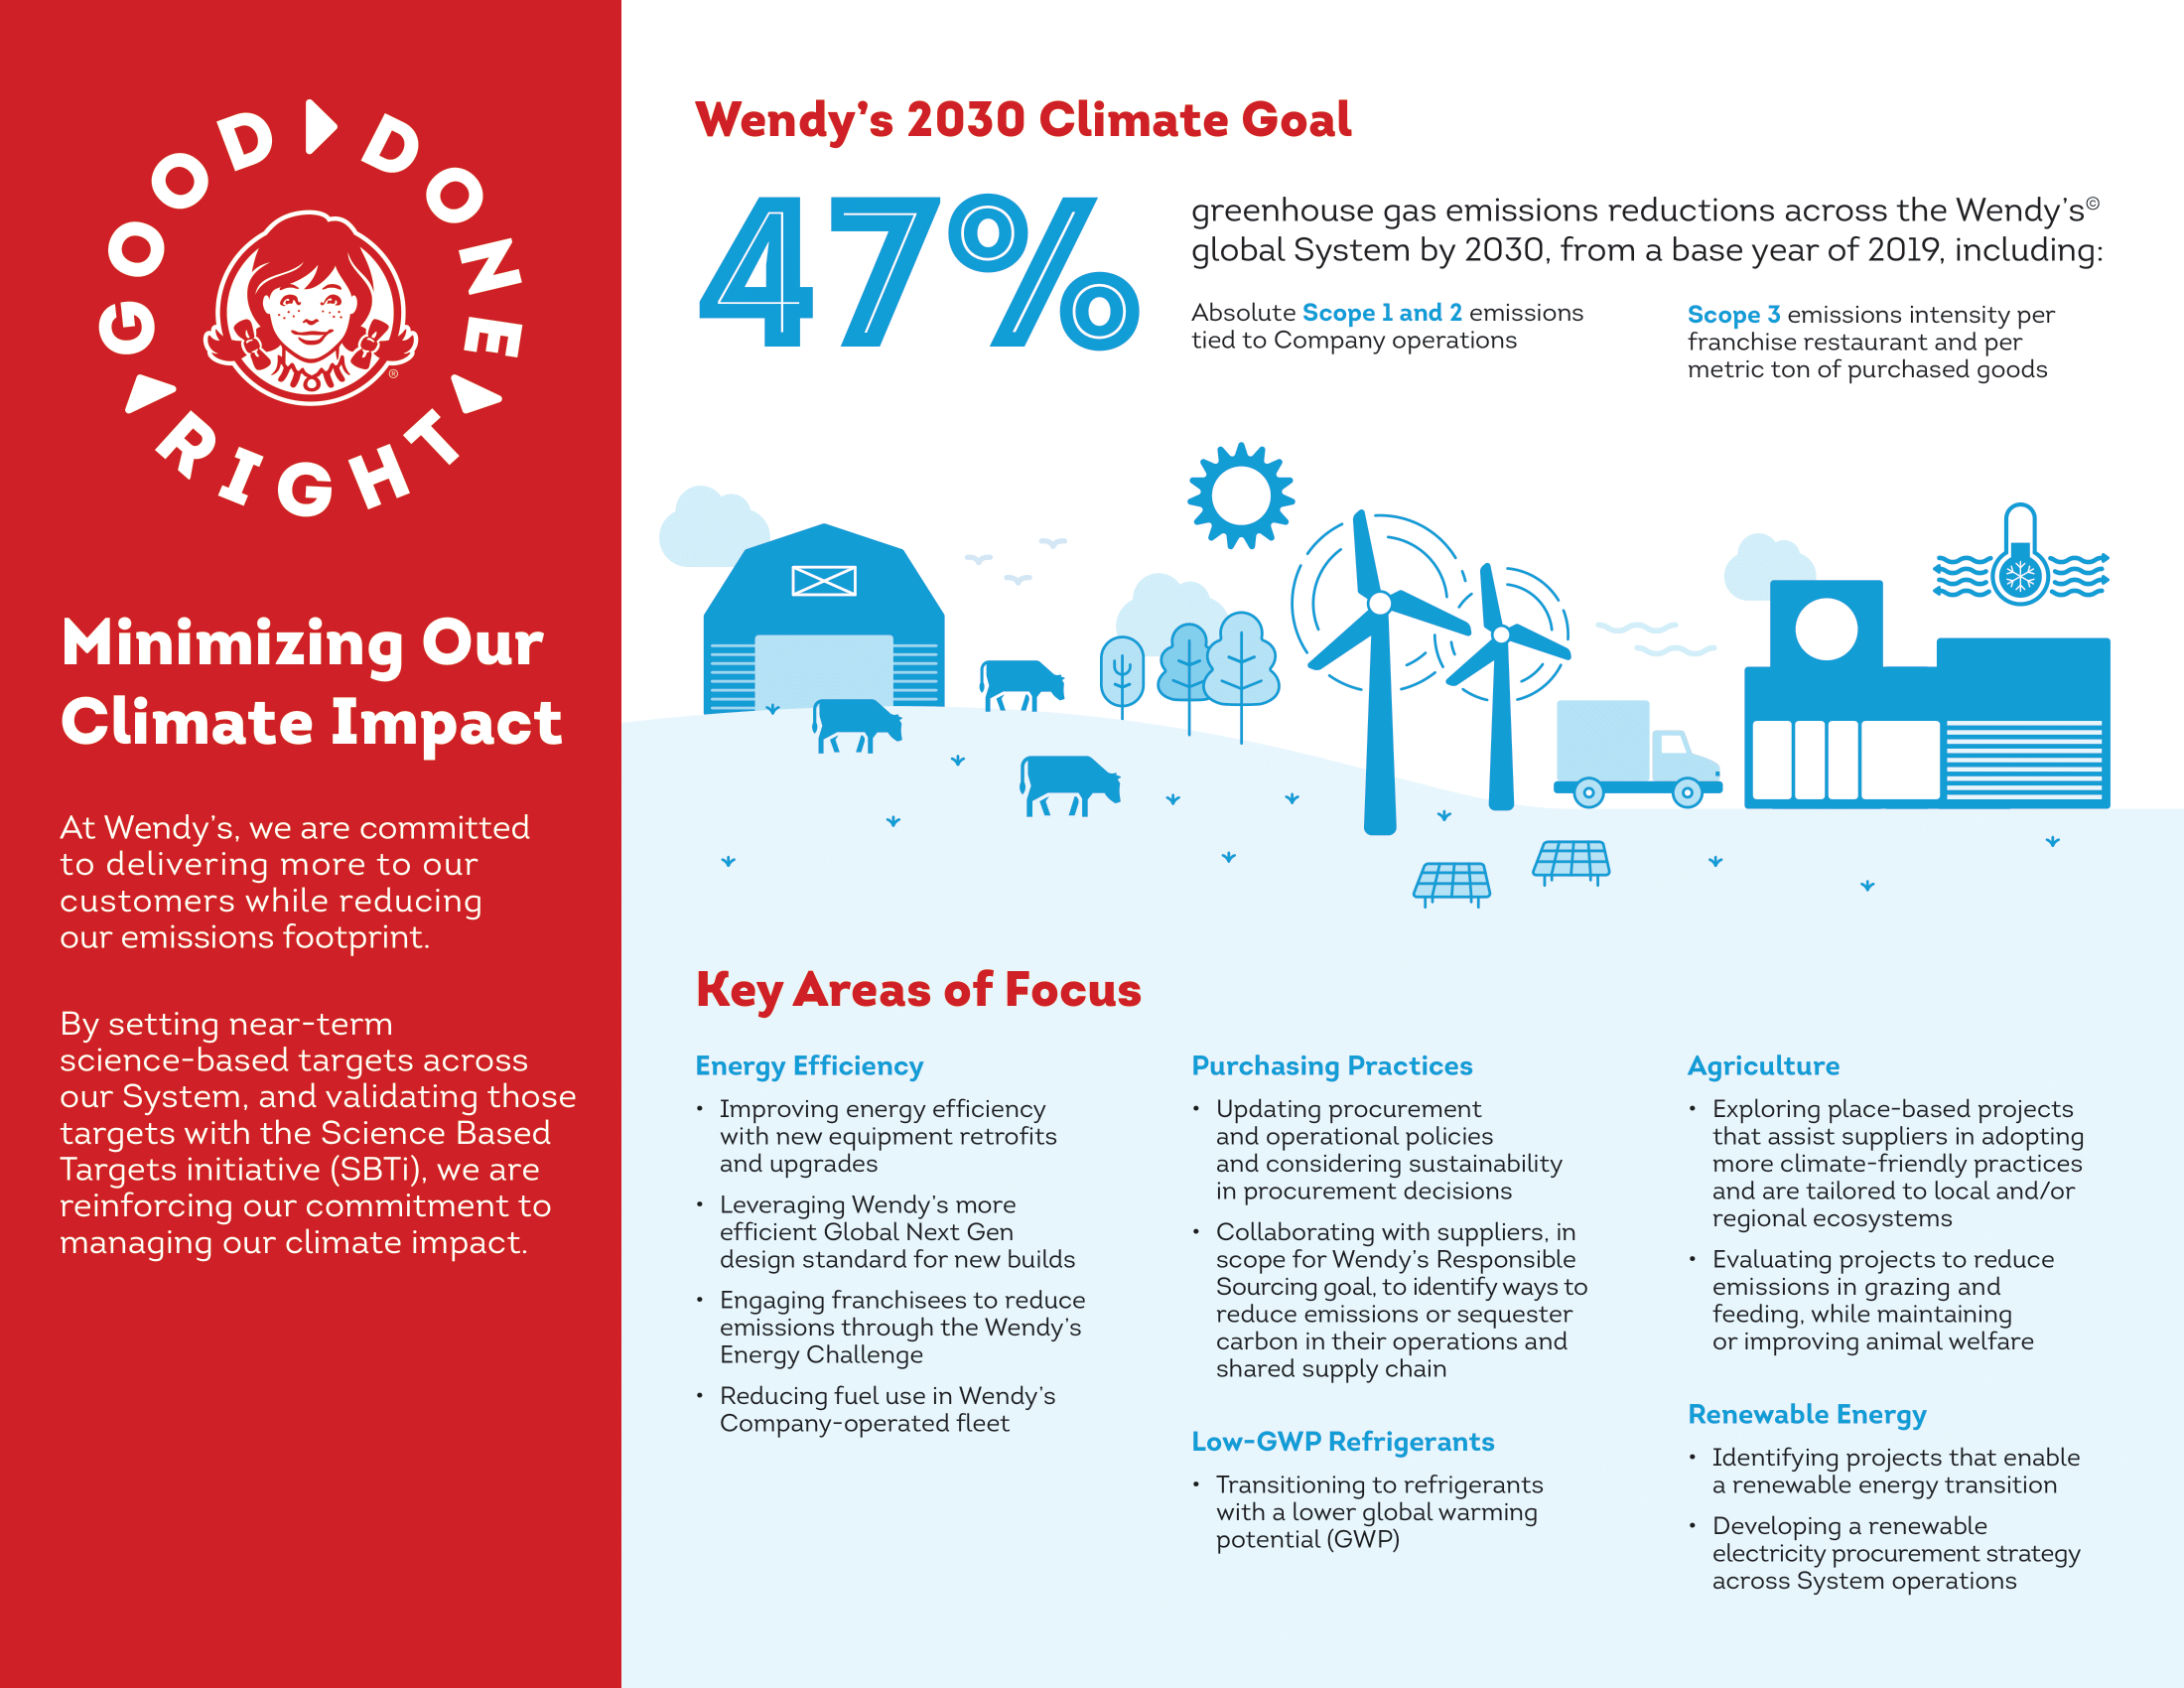 Wendy's Science-Based Targets